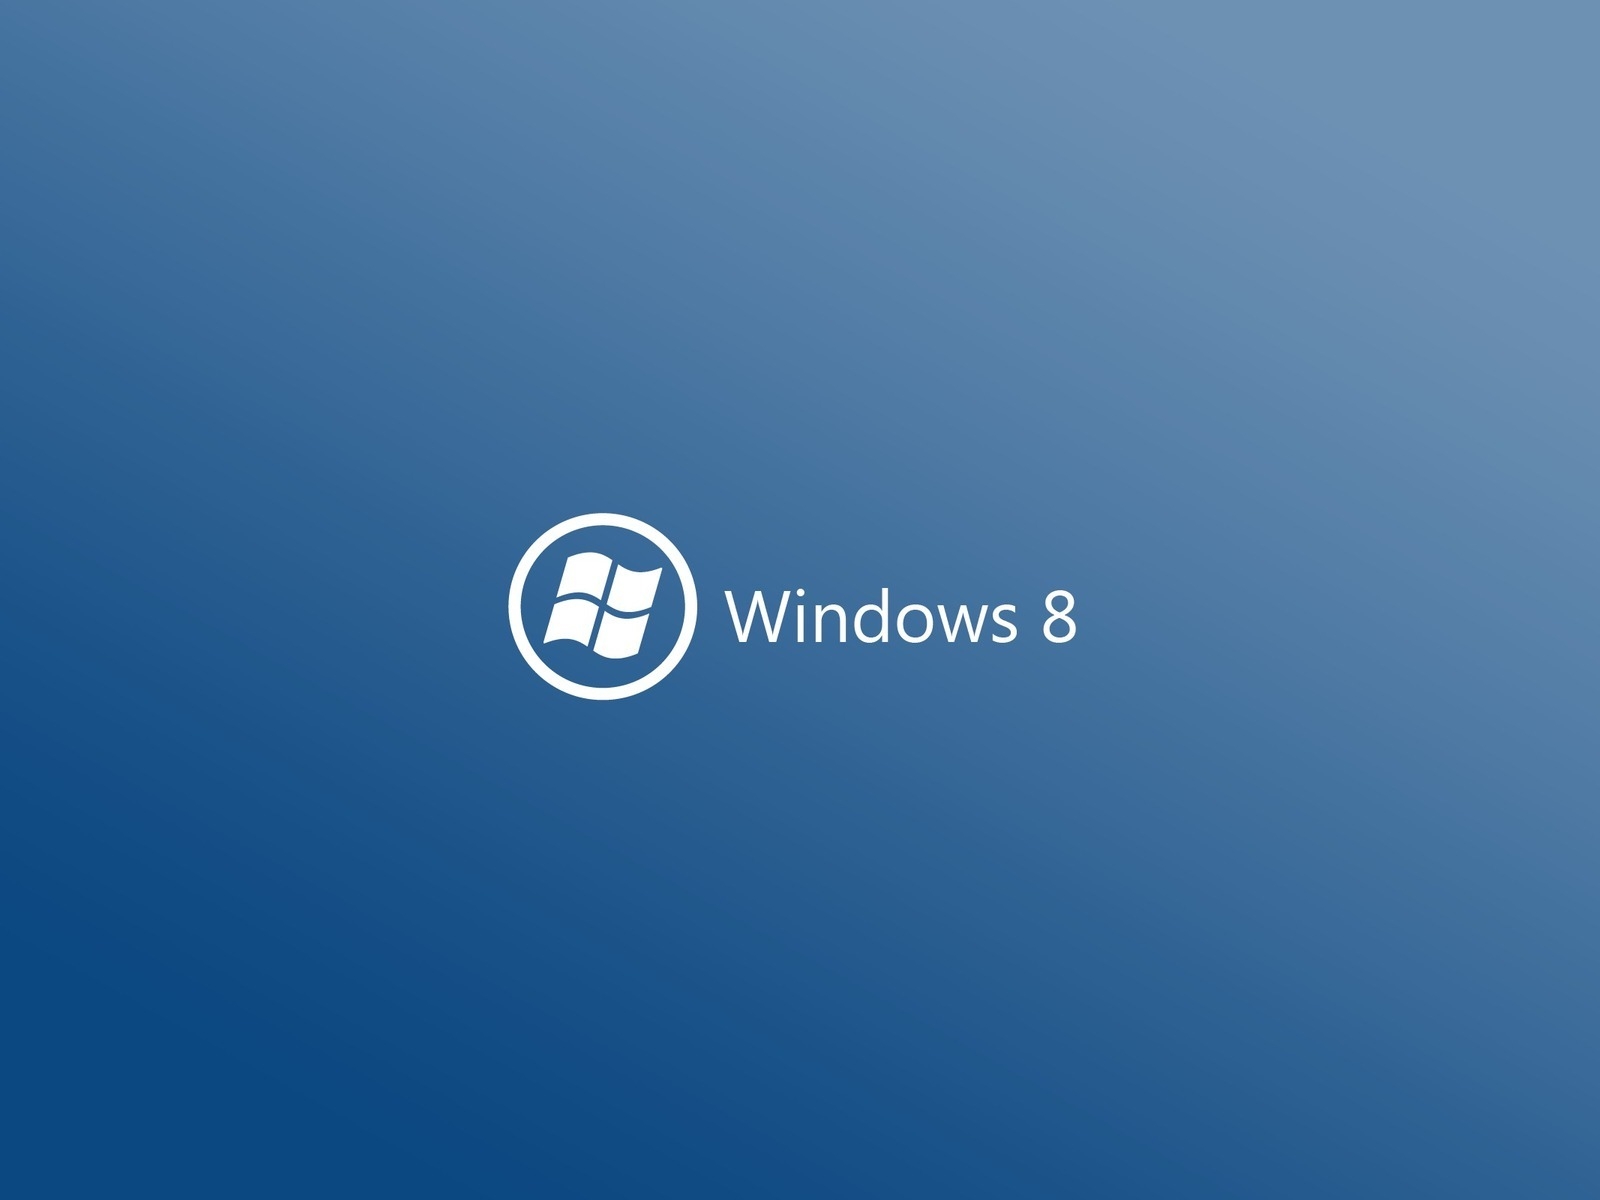 Windows 8 Logo for 1600 x 1200 resolution